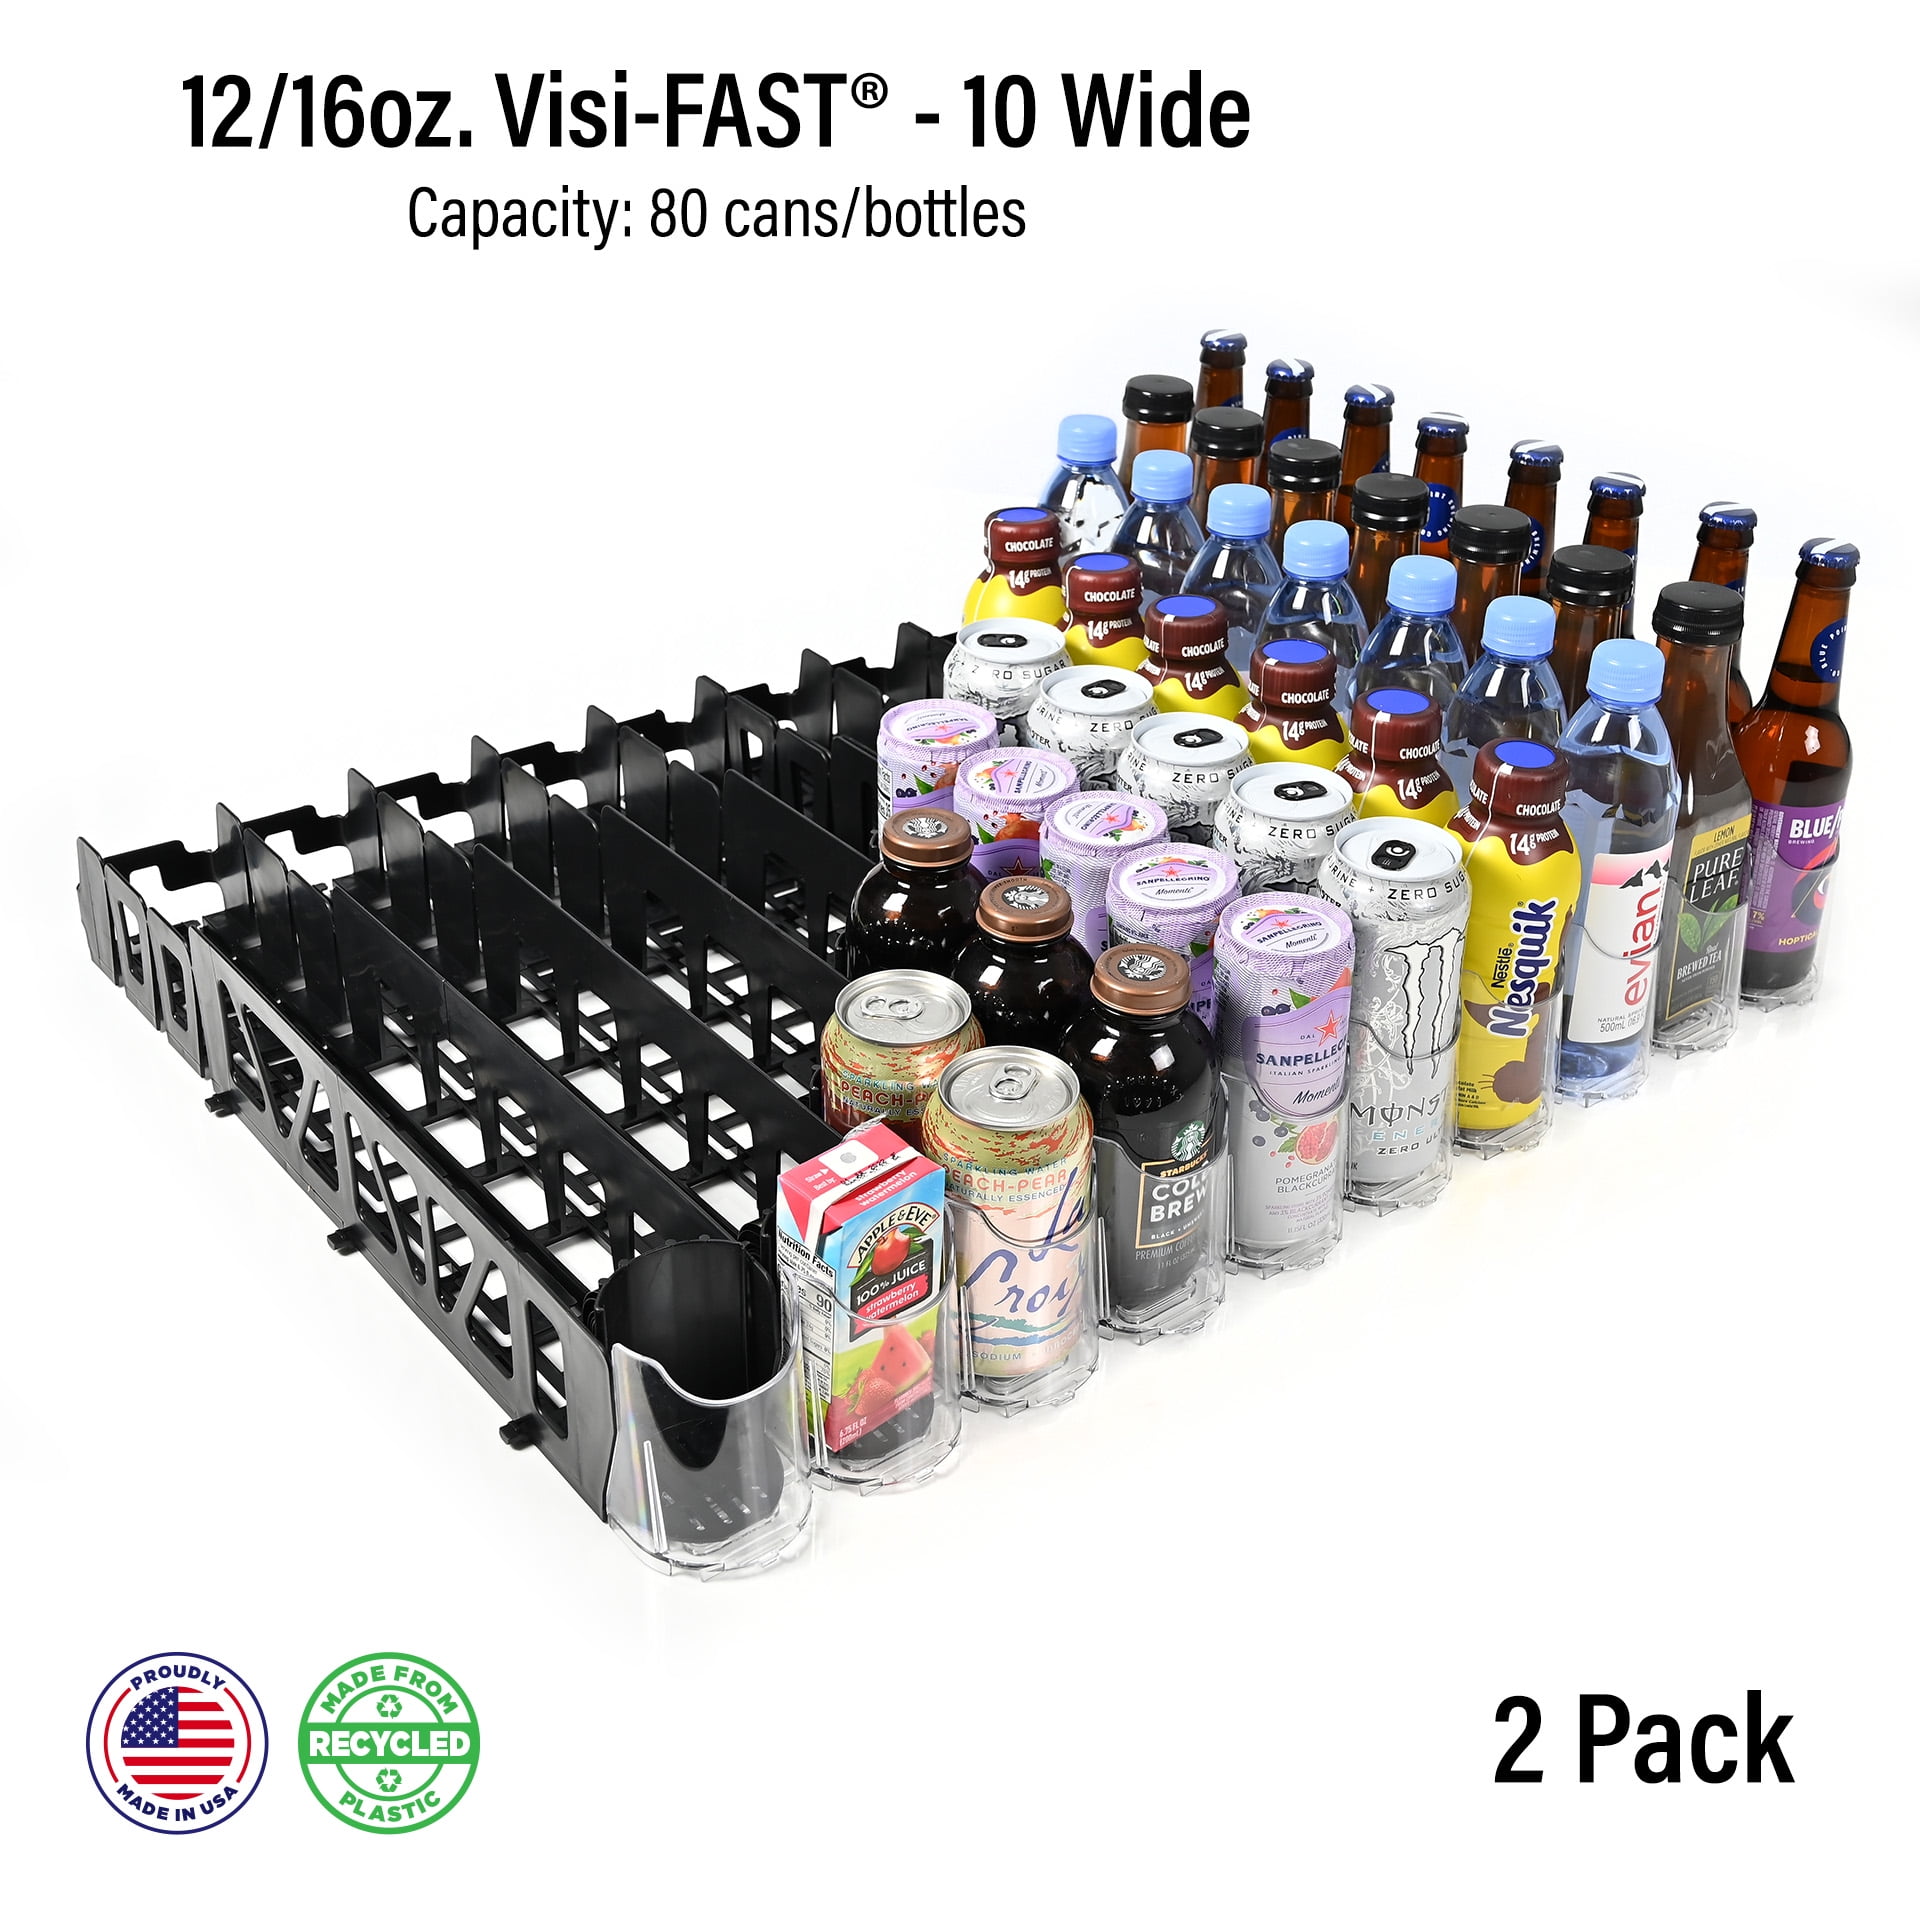 Smart Design 2 Pack Clear Stackable Bottle Organizer - Sam's Club